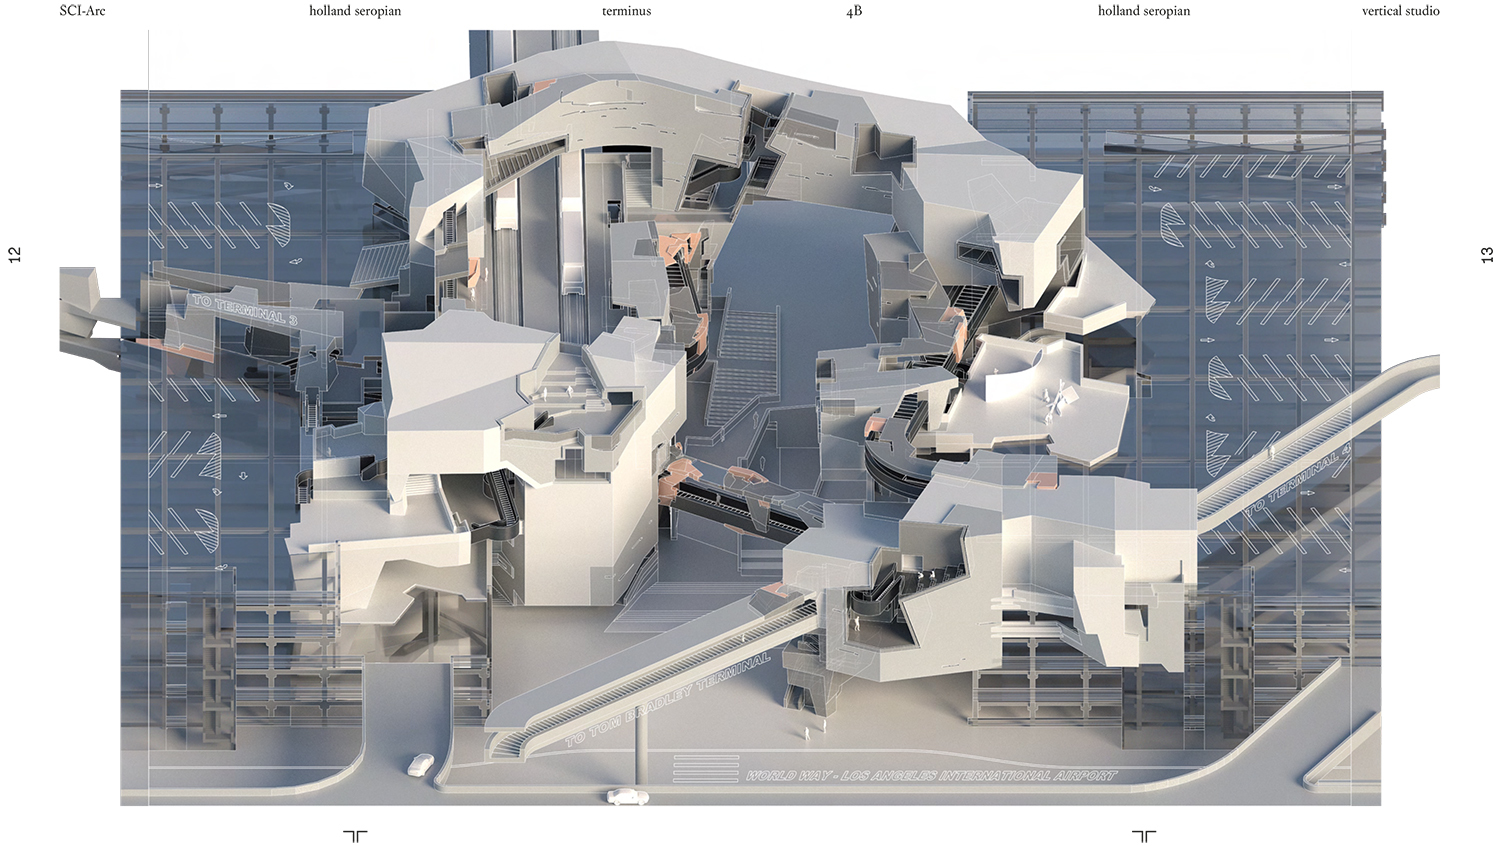 Holland Seropian building sci-arc model rendering